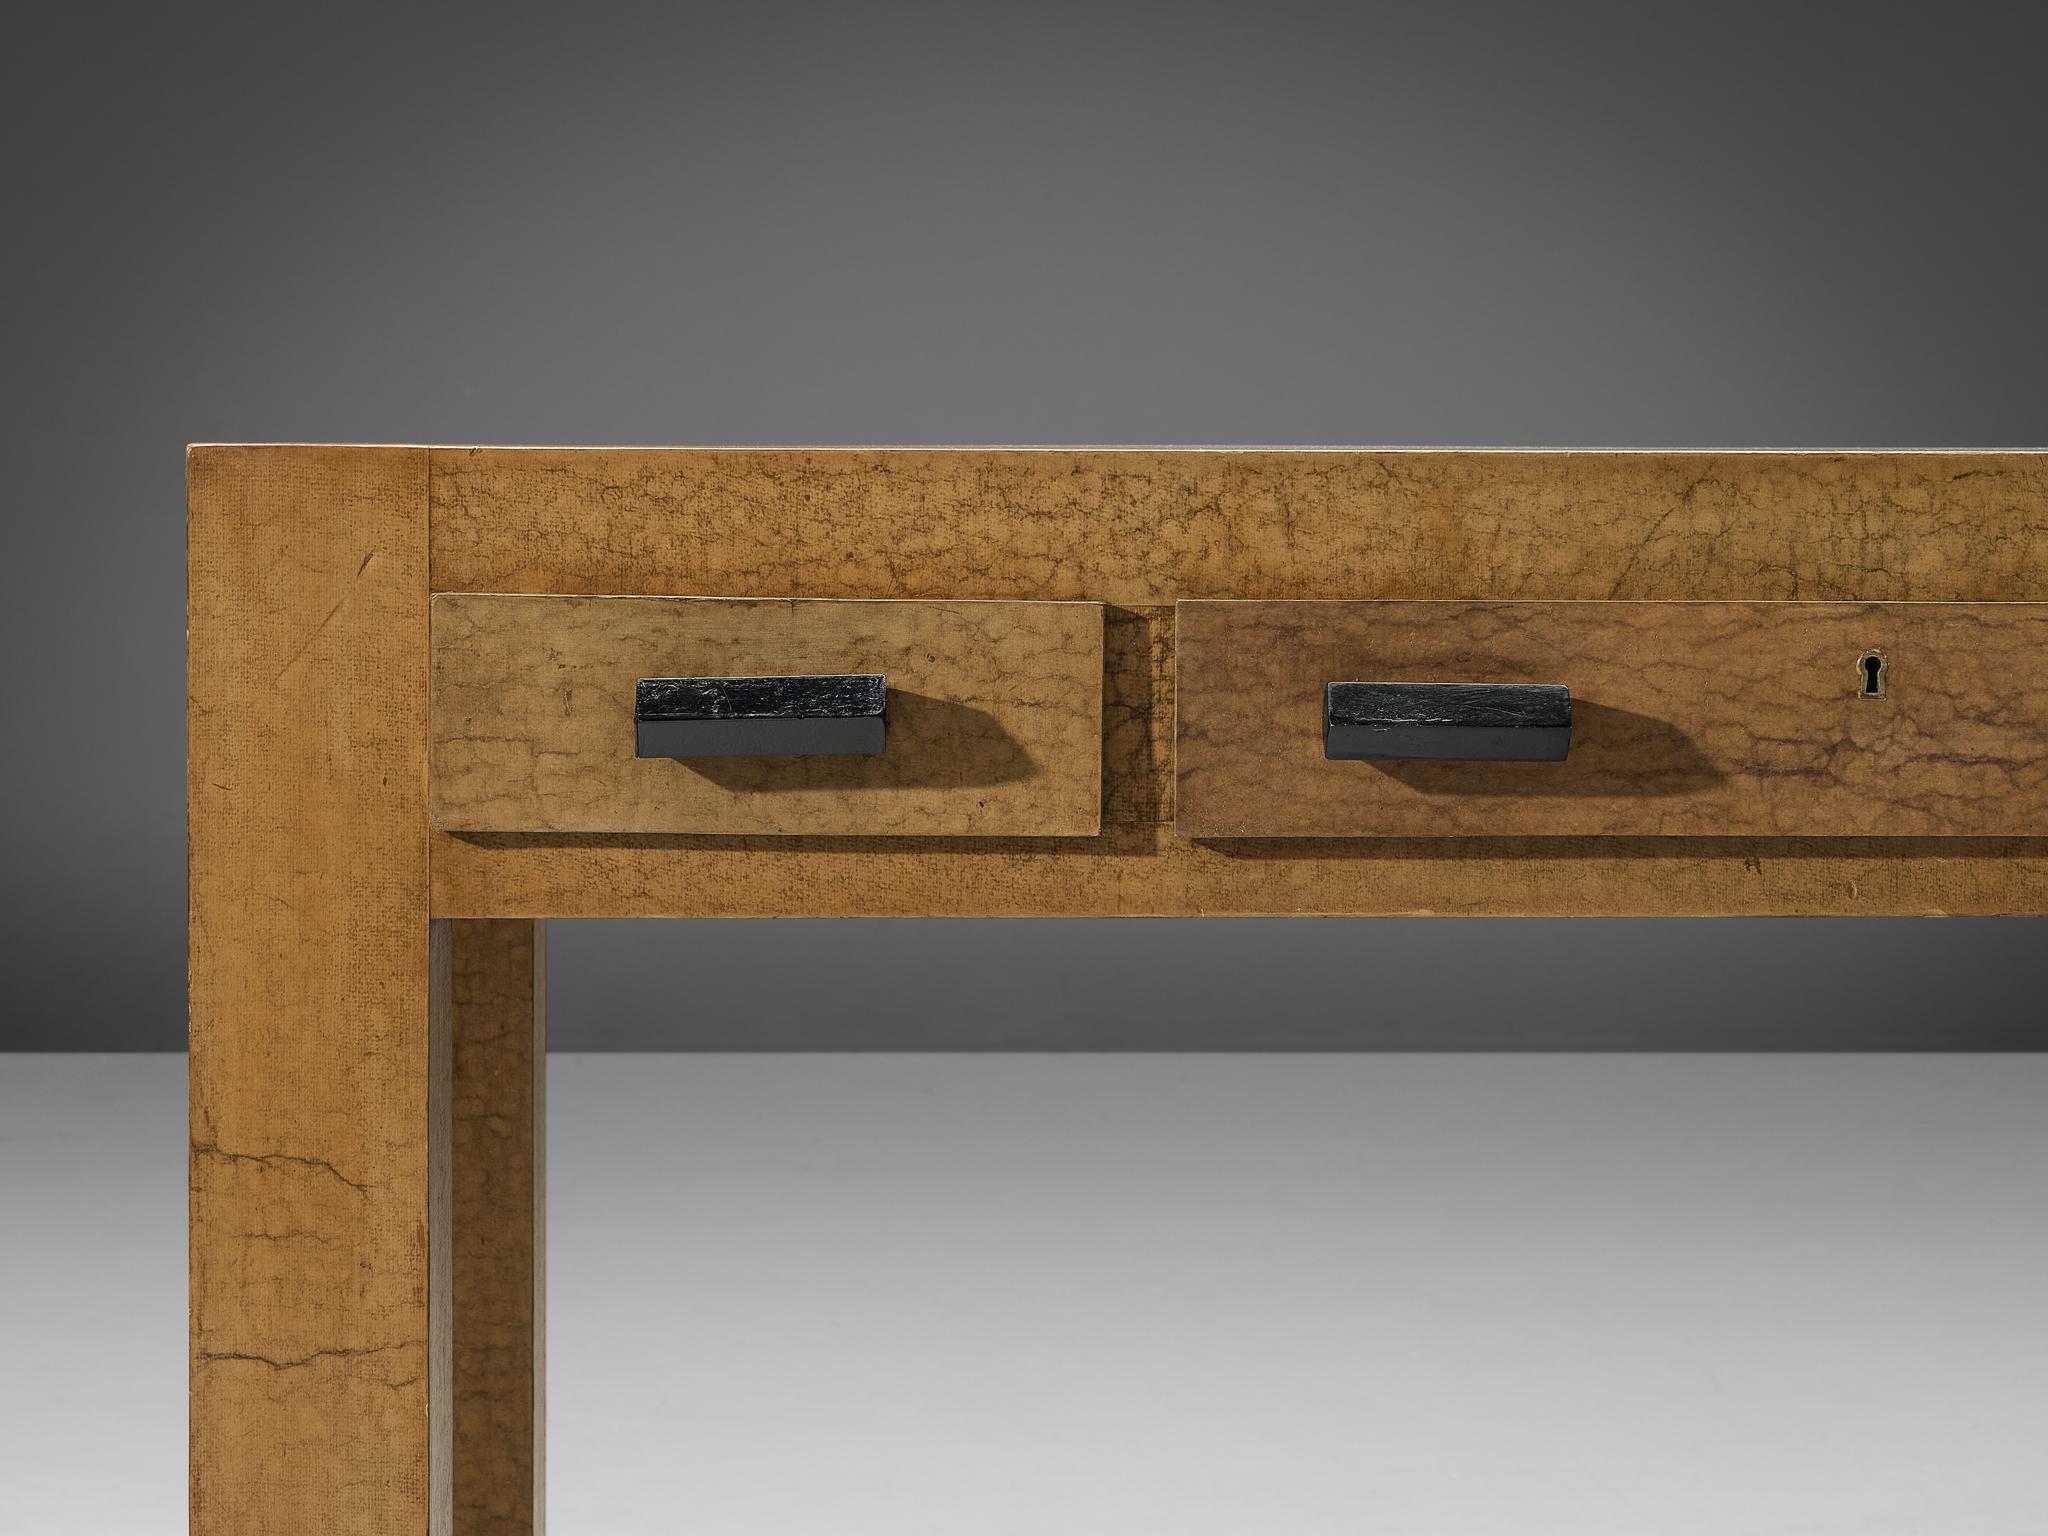 Art Deco Giuseppe Pagano-Pogatschnig and Gino Levi Montalcini Desk in Wood and Buxus 